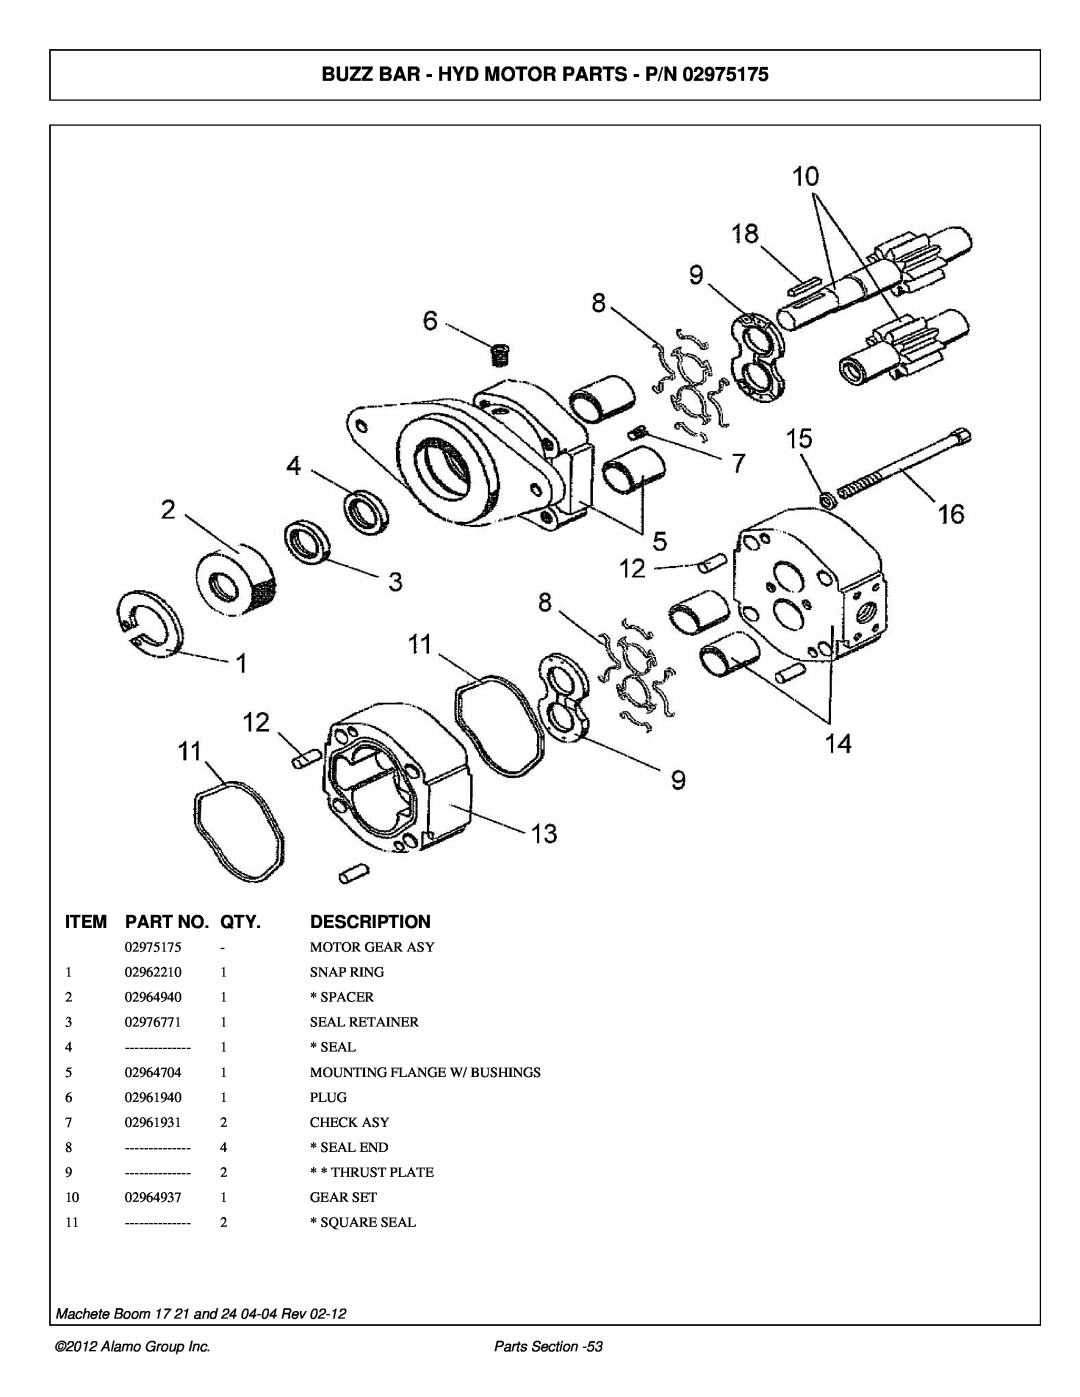 Alamo 02968915P manual Buzz Bar - Hyd Motor Parts - P/N, Part No, Description, Machete Boom 17 21 and 24 04-04Rev 